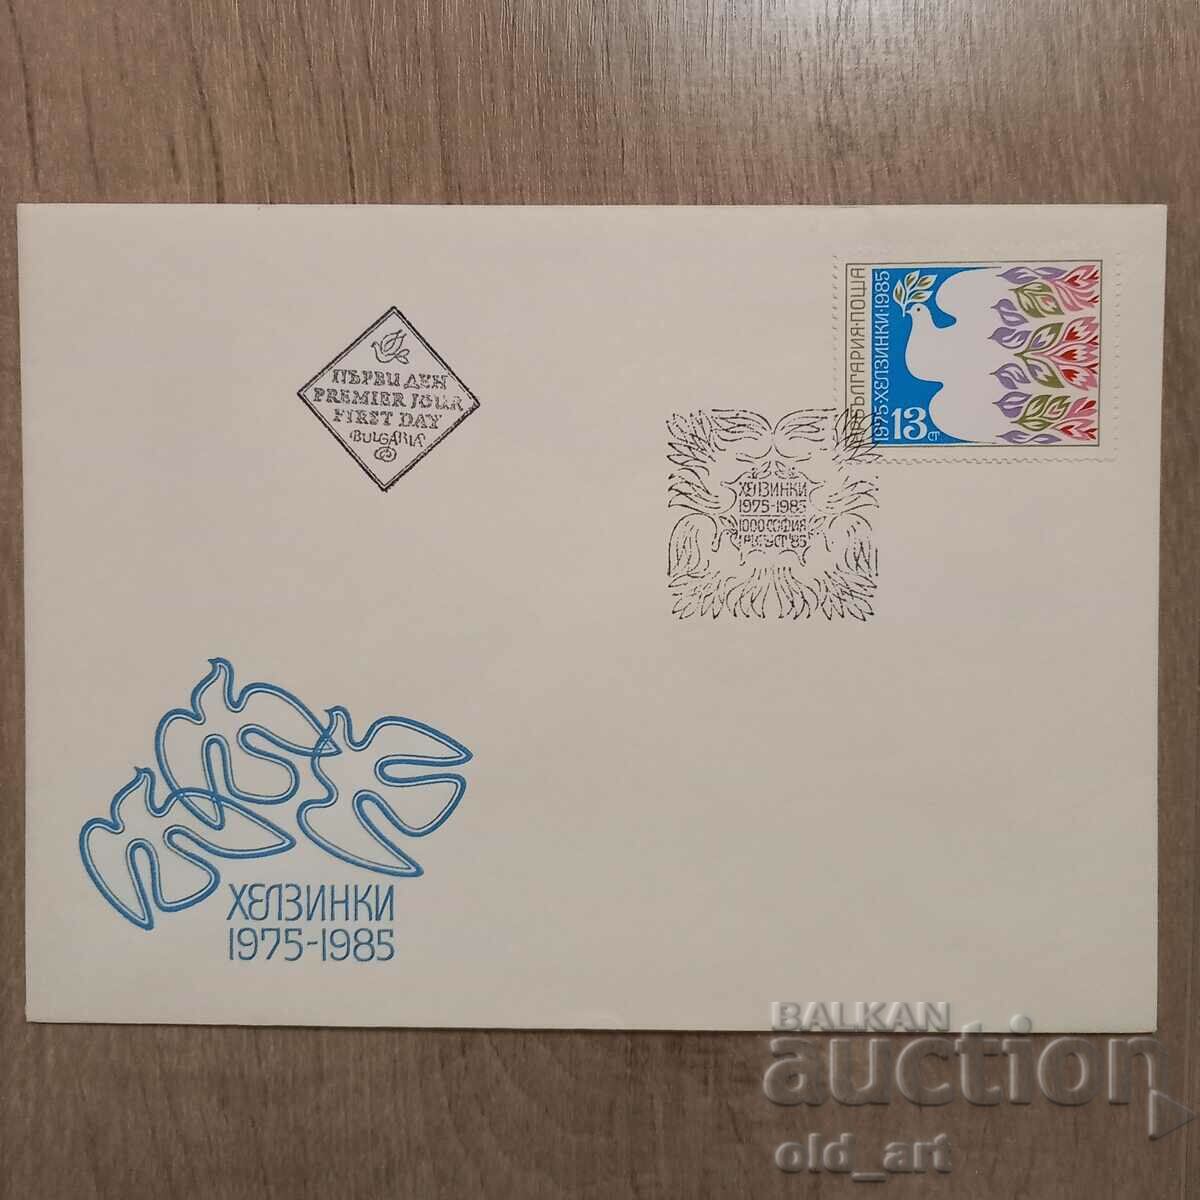 Postal envelope - Helsinki 85